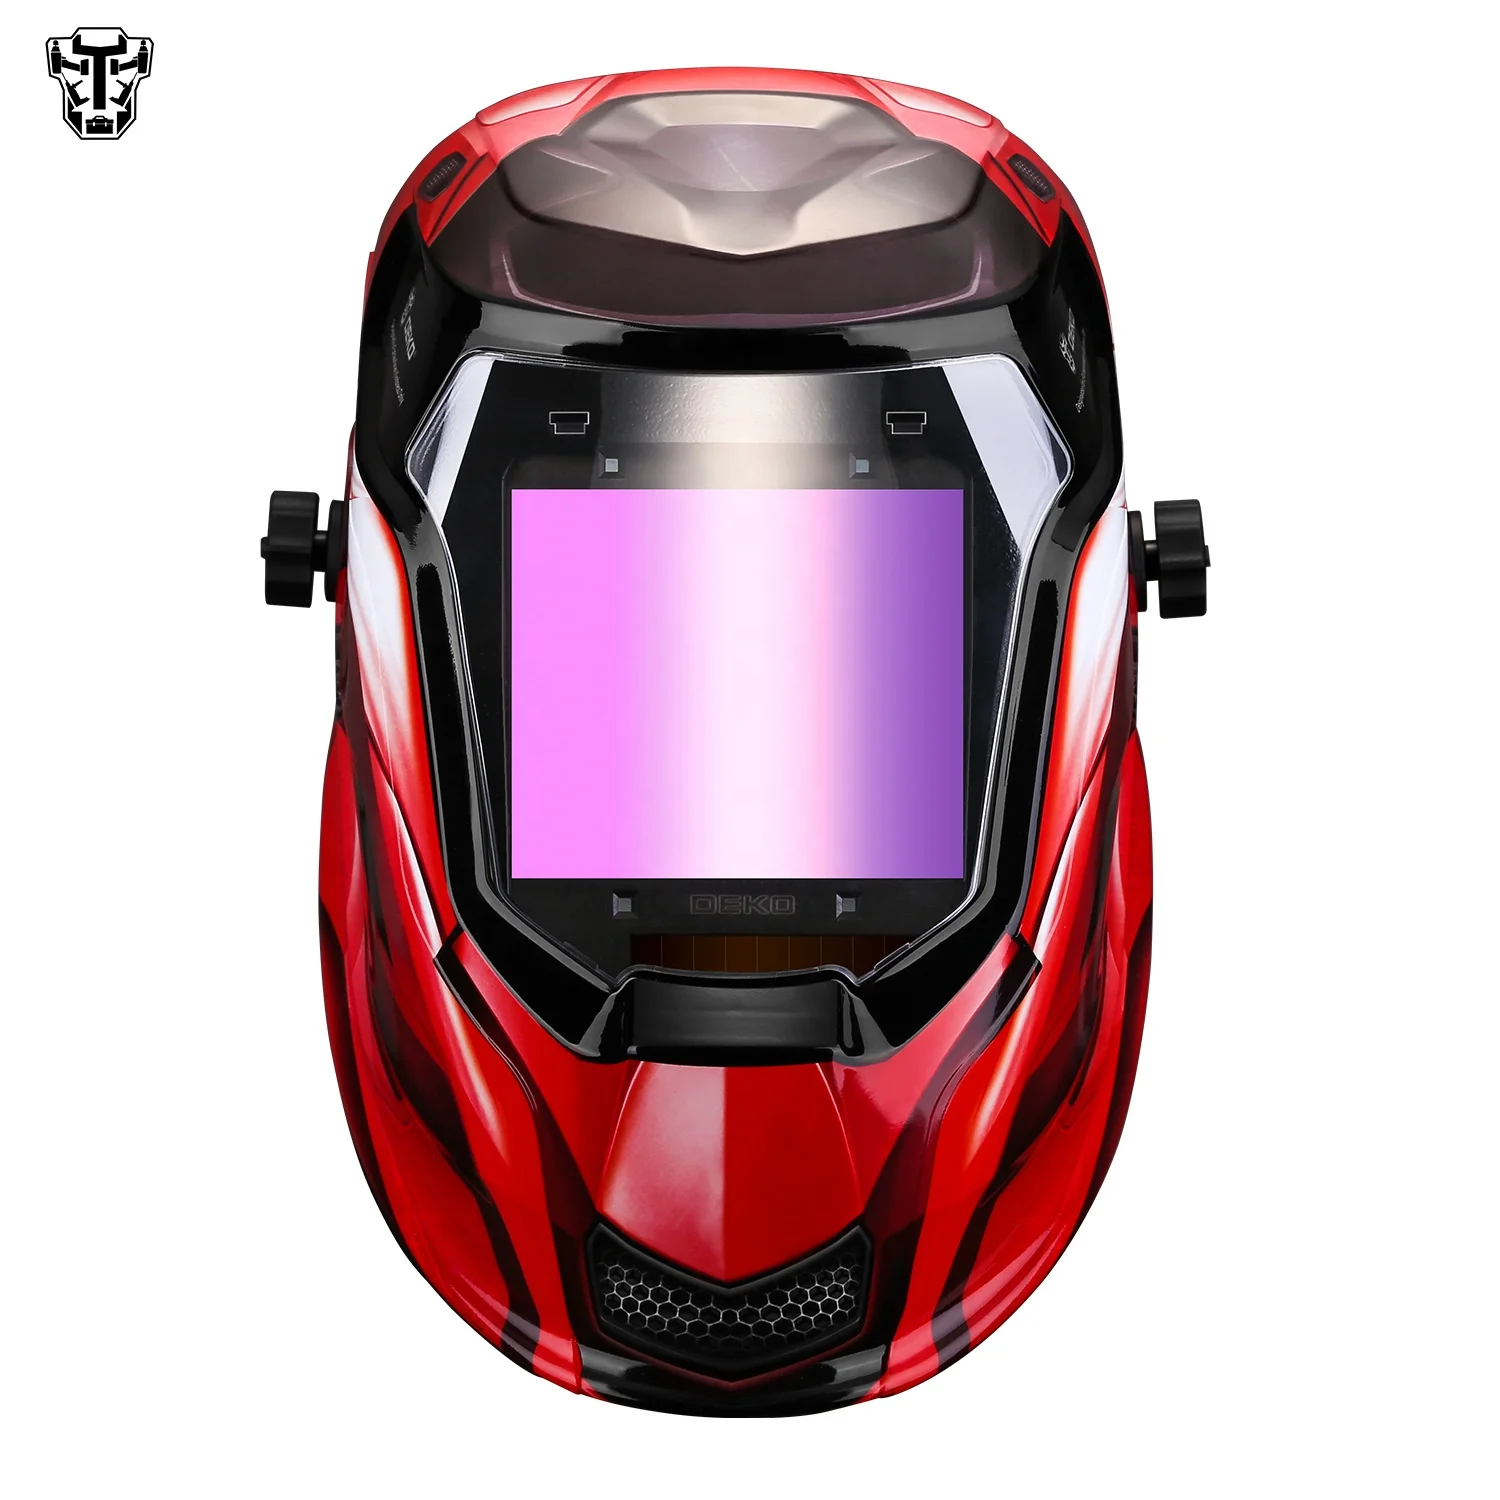 Welding Helmet Auto Darkening Solar Powered Professional Welding Mask Red 